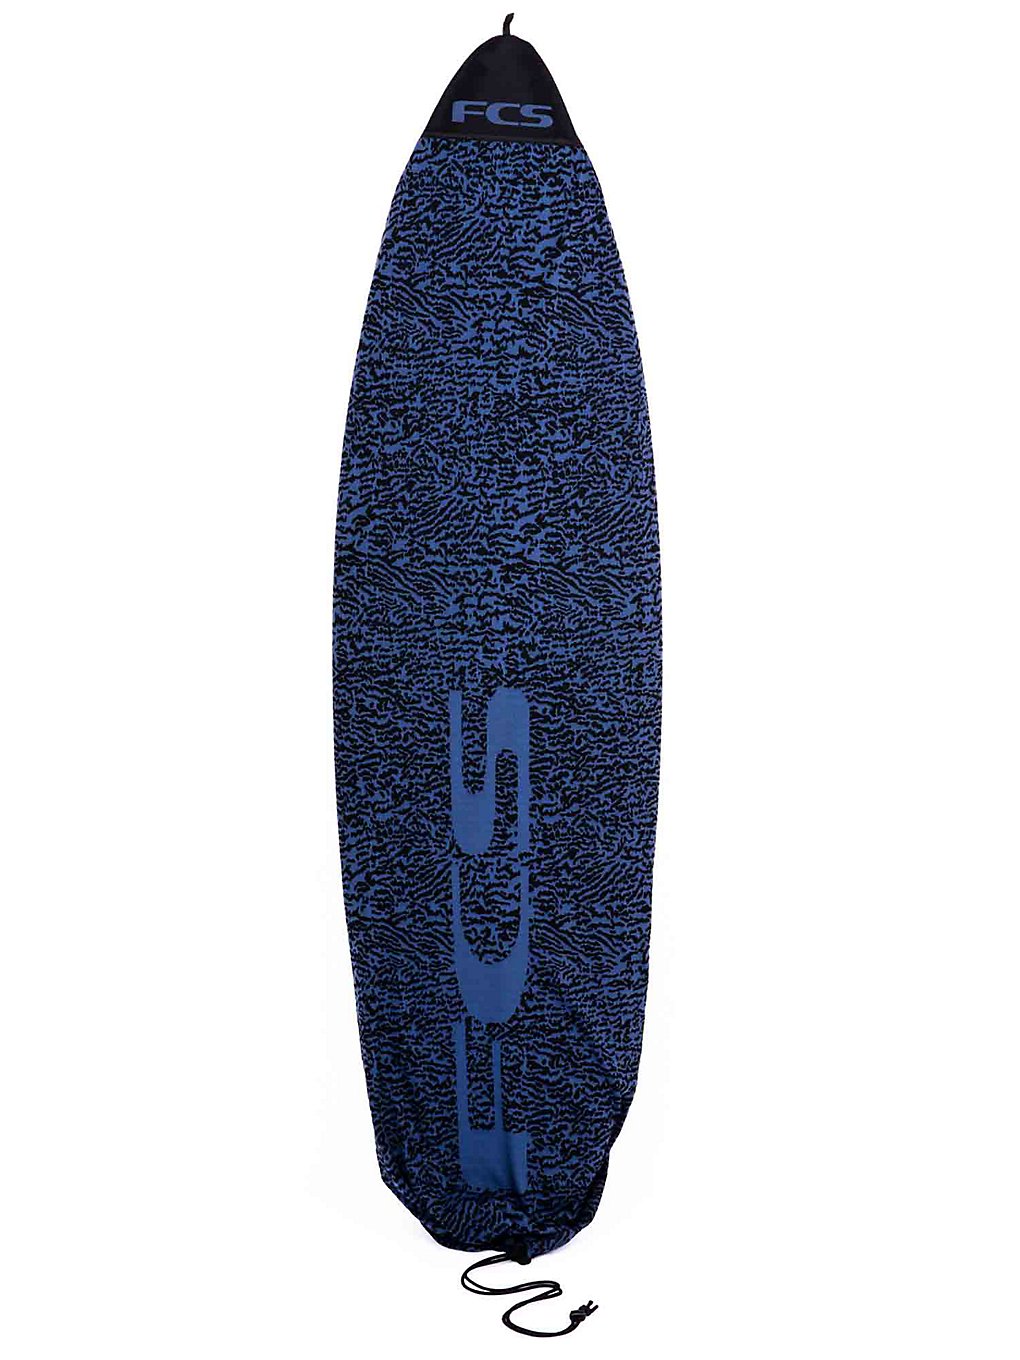 FCS Stretch Fun Board 6'3" Surfboard-Tasche stone blue kaufen